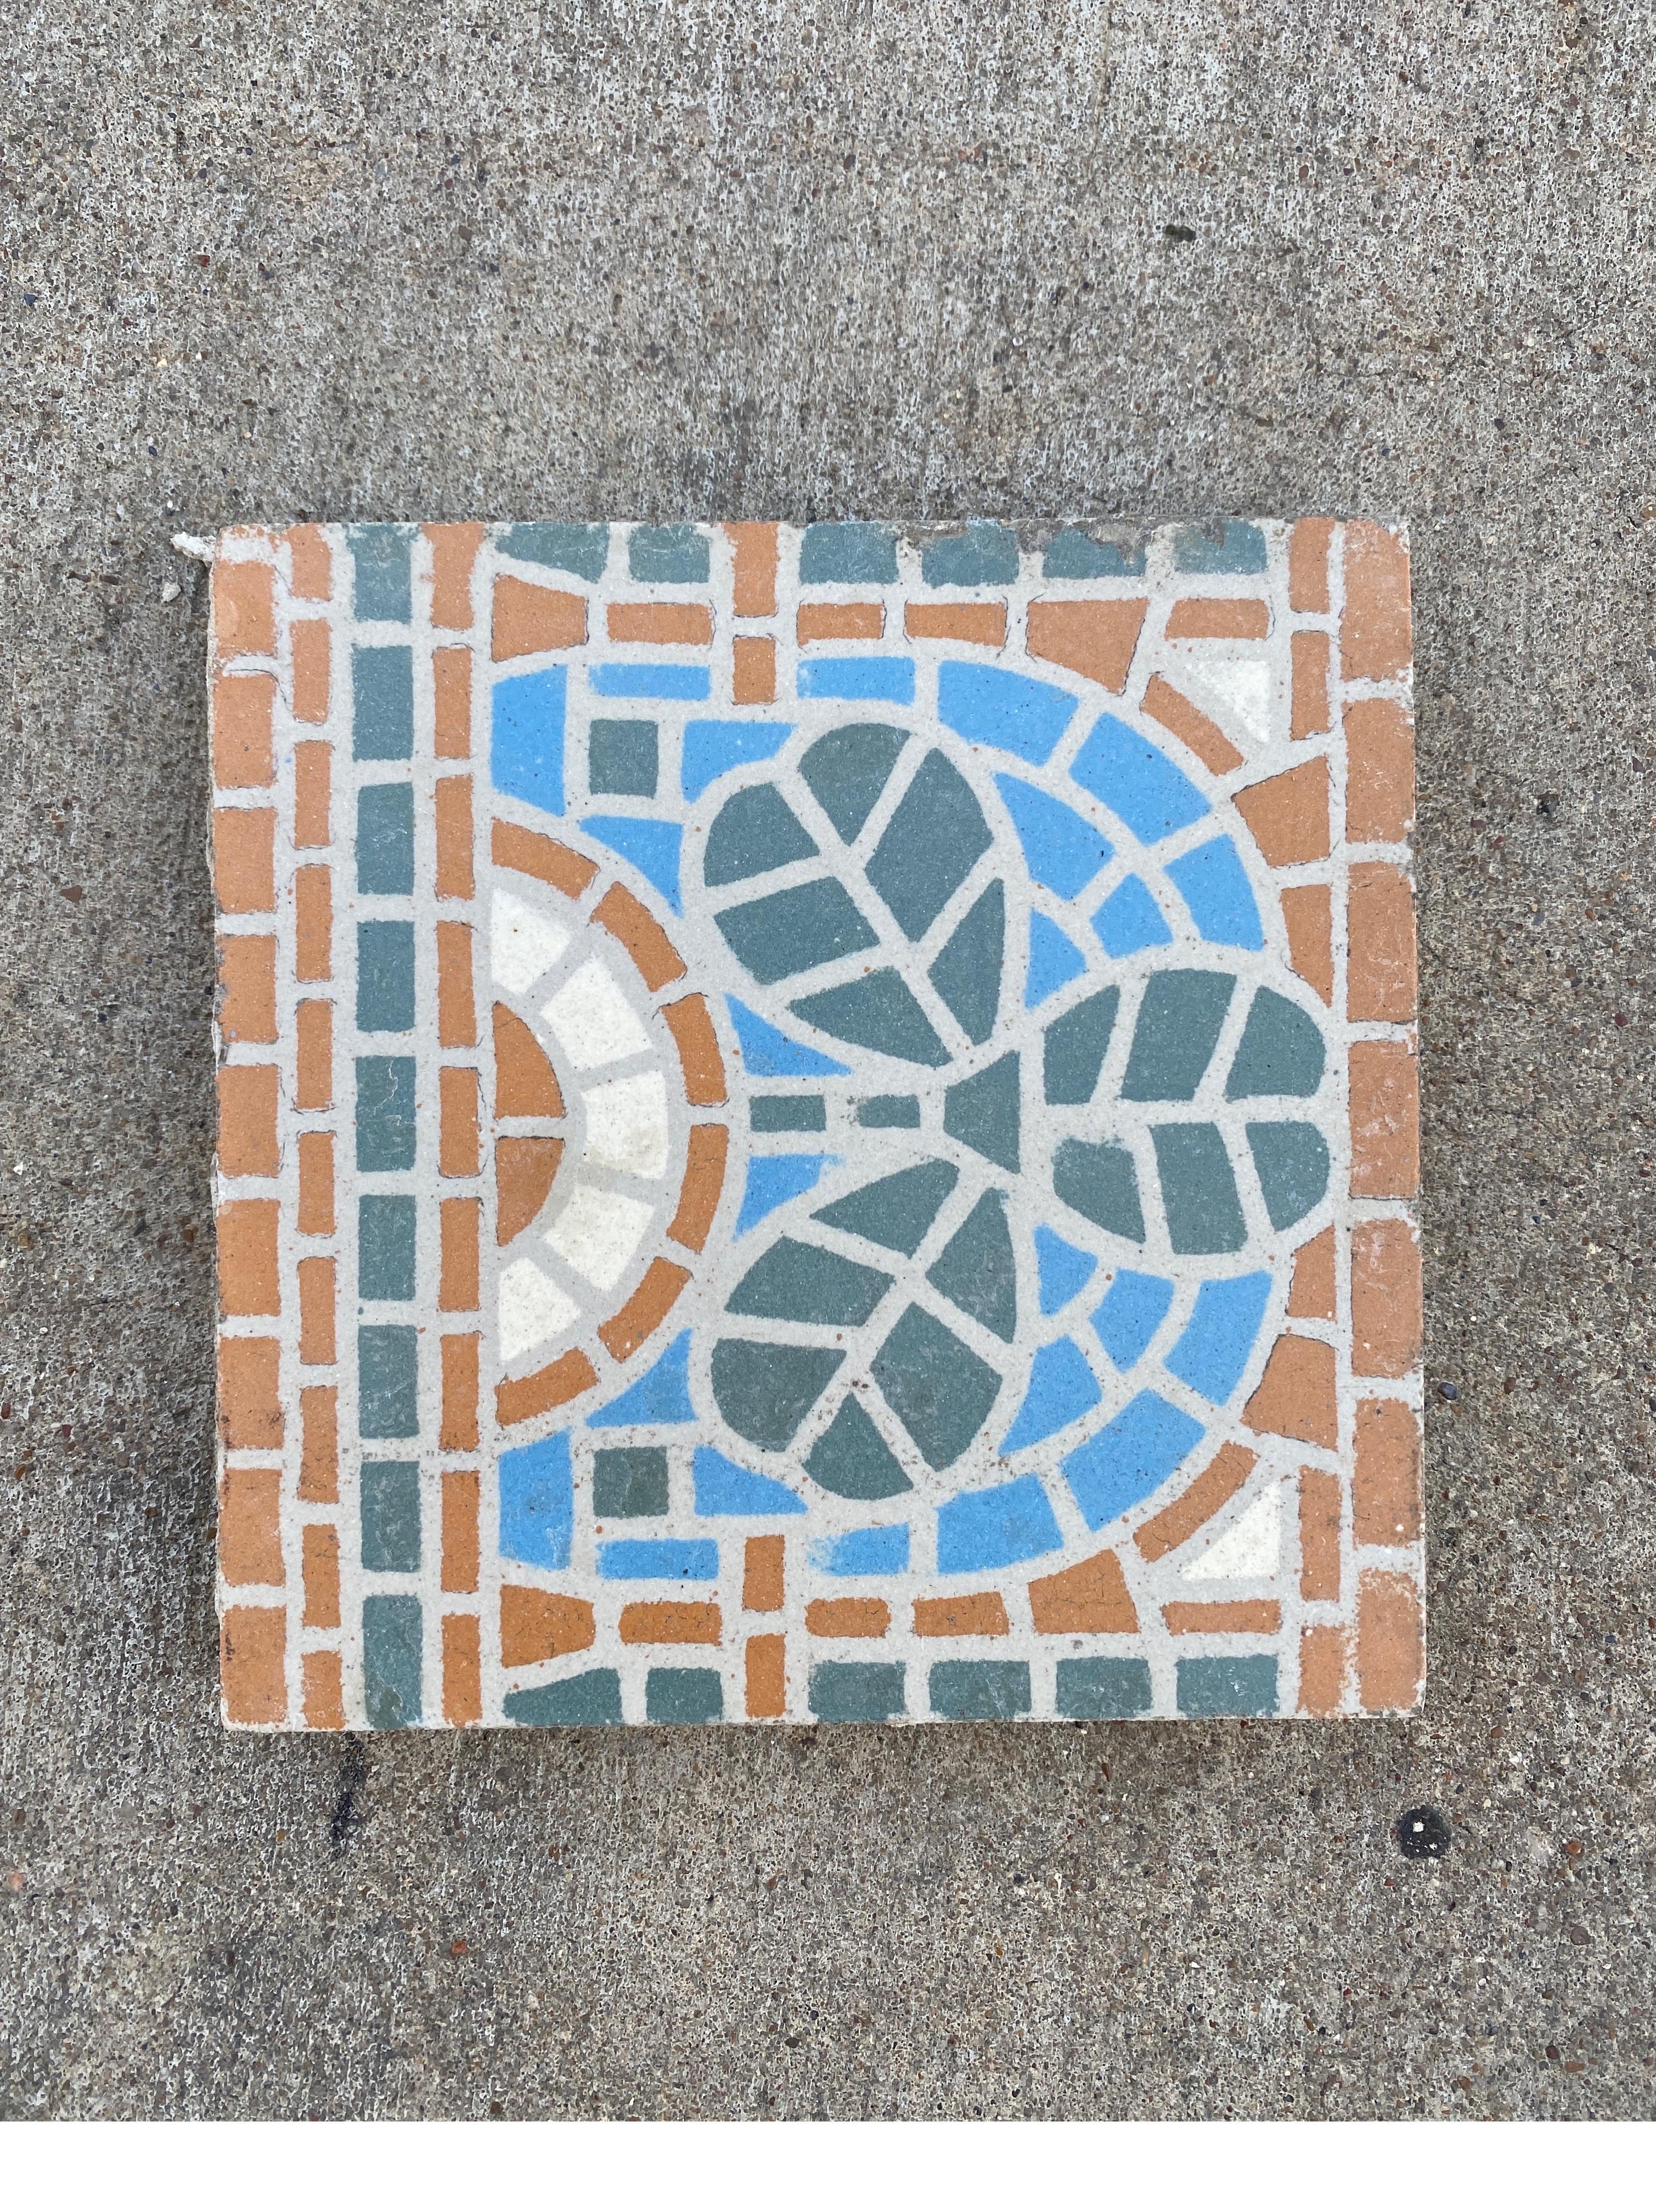 encaustic style tiles